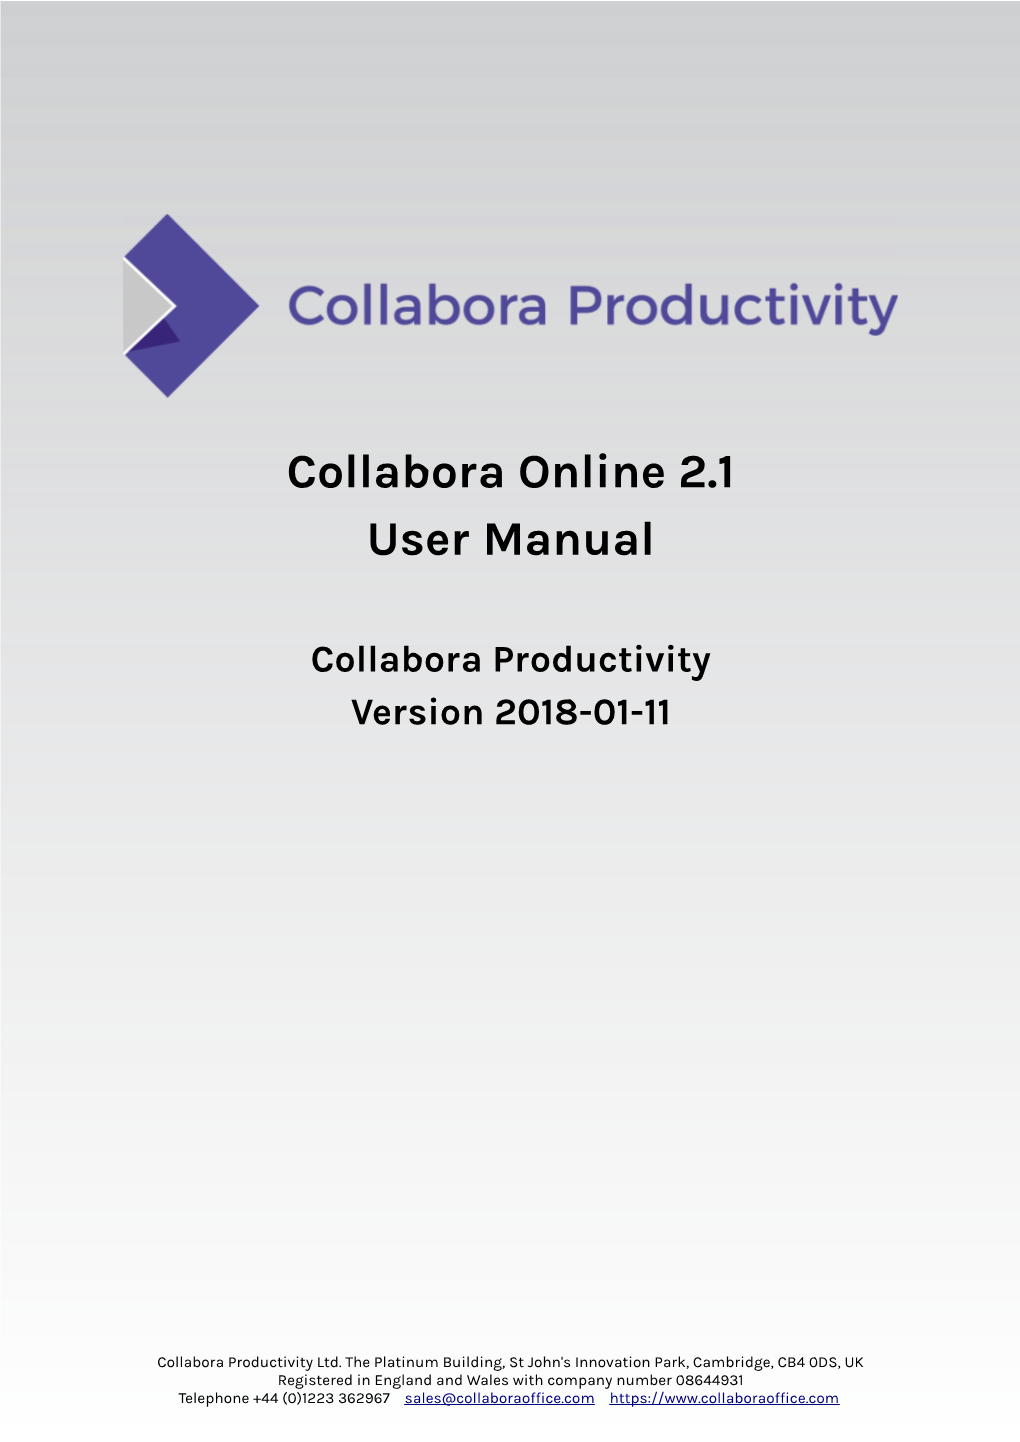 Collabora Online User Manual